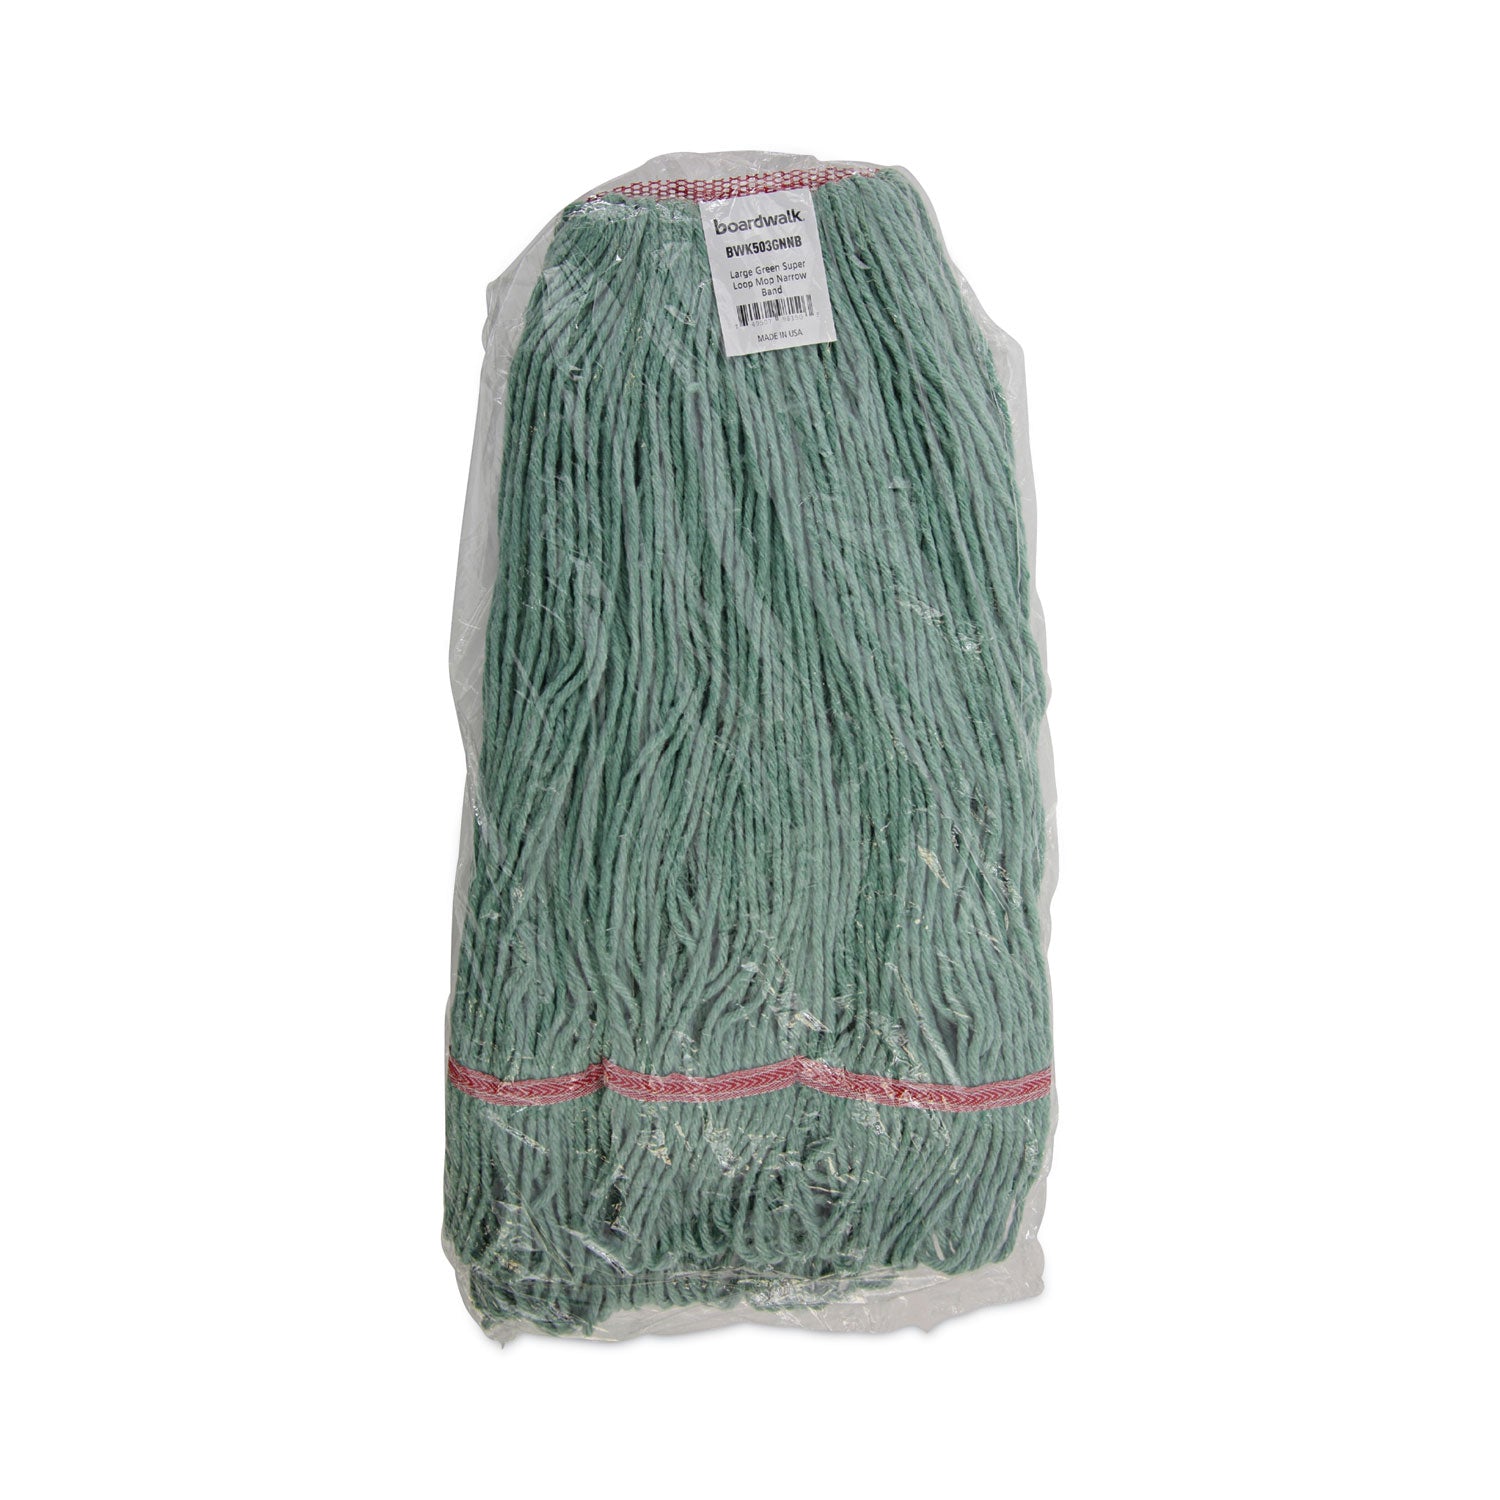 mop-head-premium-standard-head-cotton-rayon-fiber-large-green_bwk503gnnb - 7